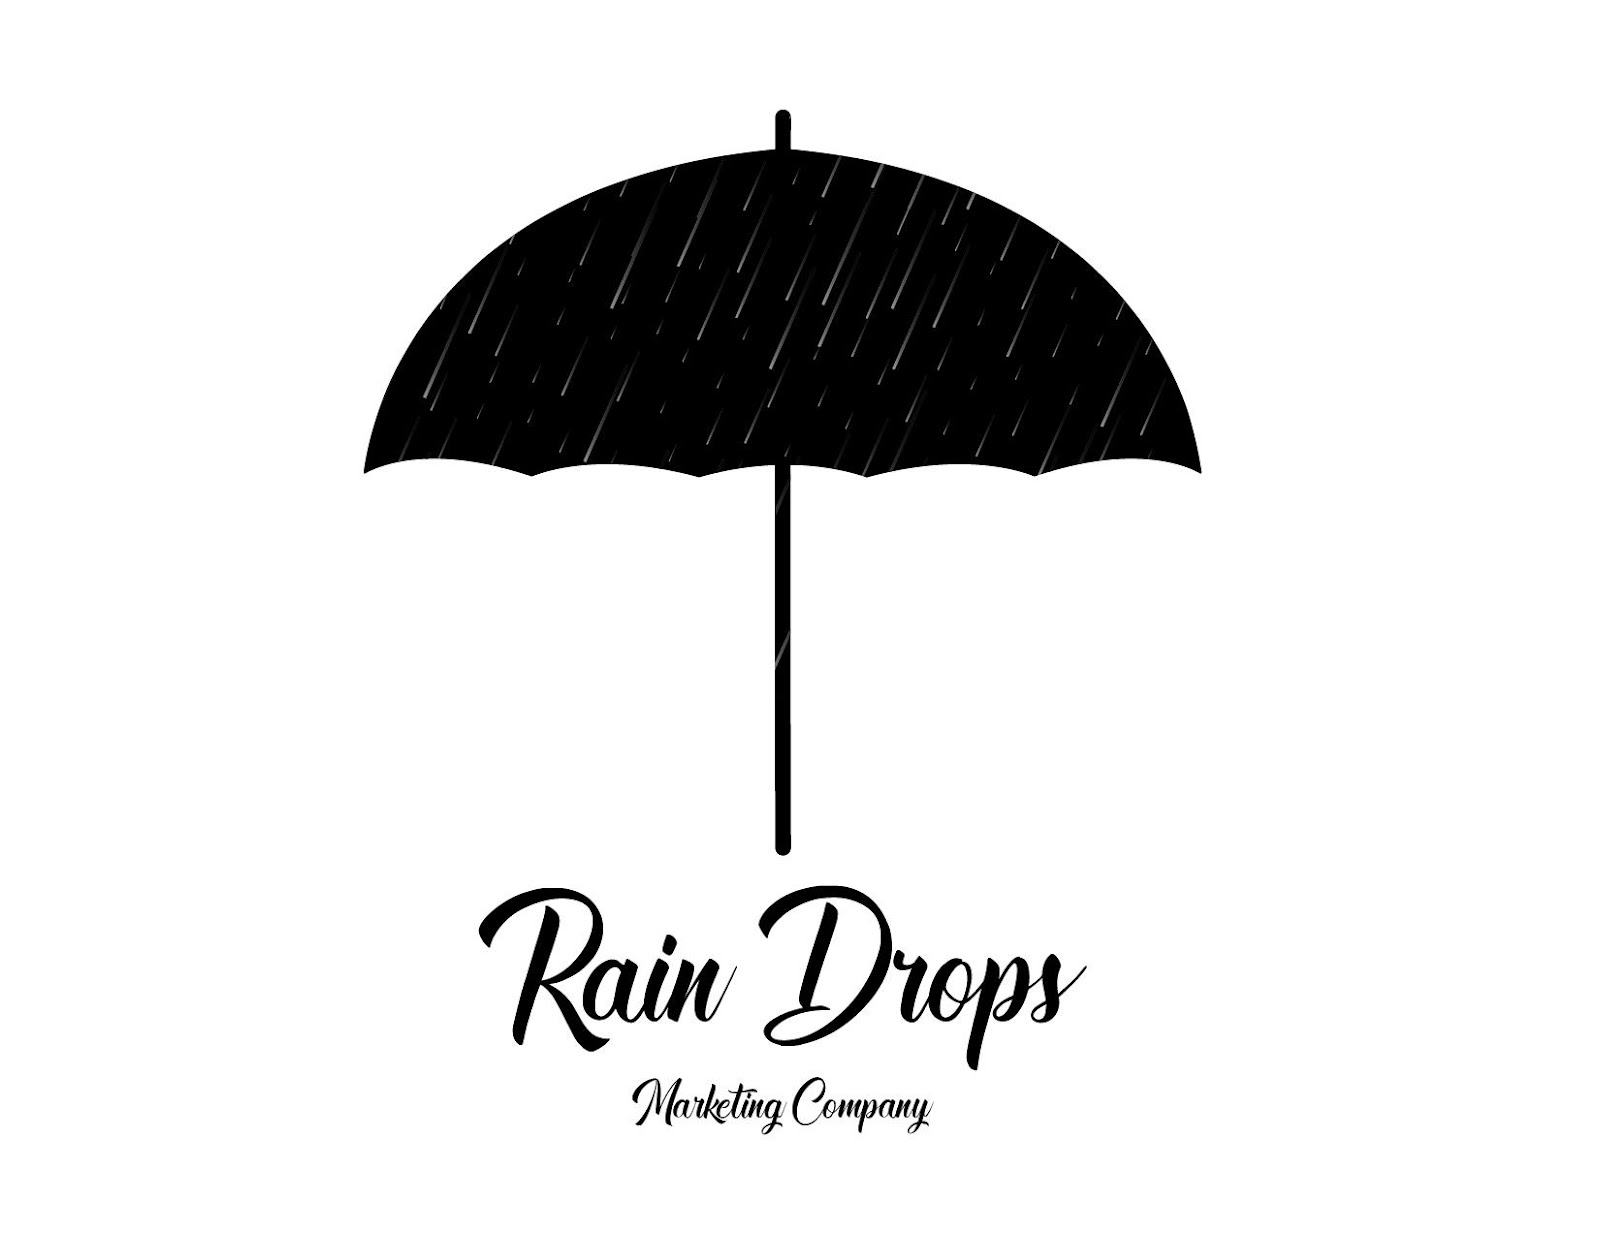 Raindrops Marketing, Monday, April 4, 2022, Press release picture